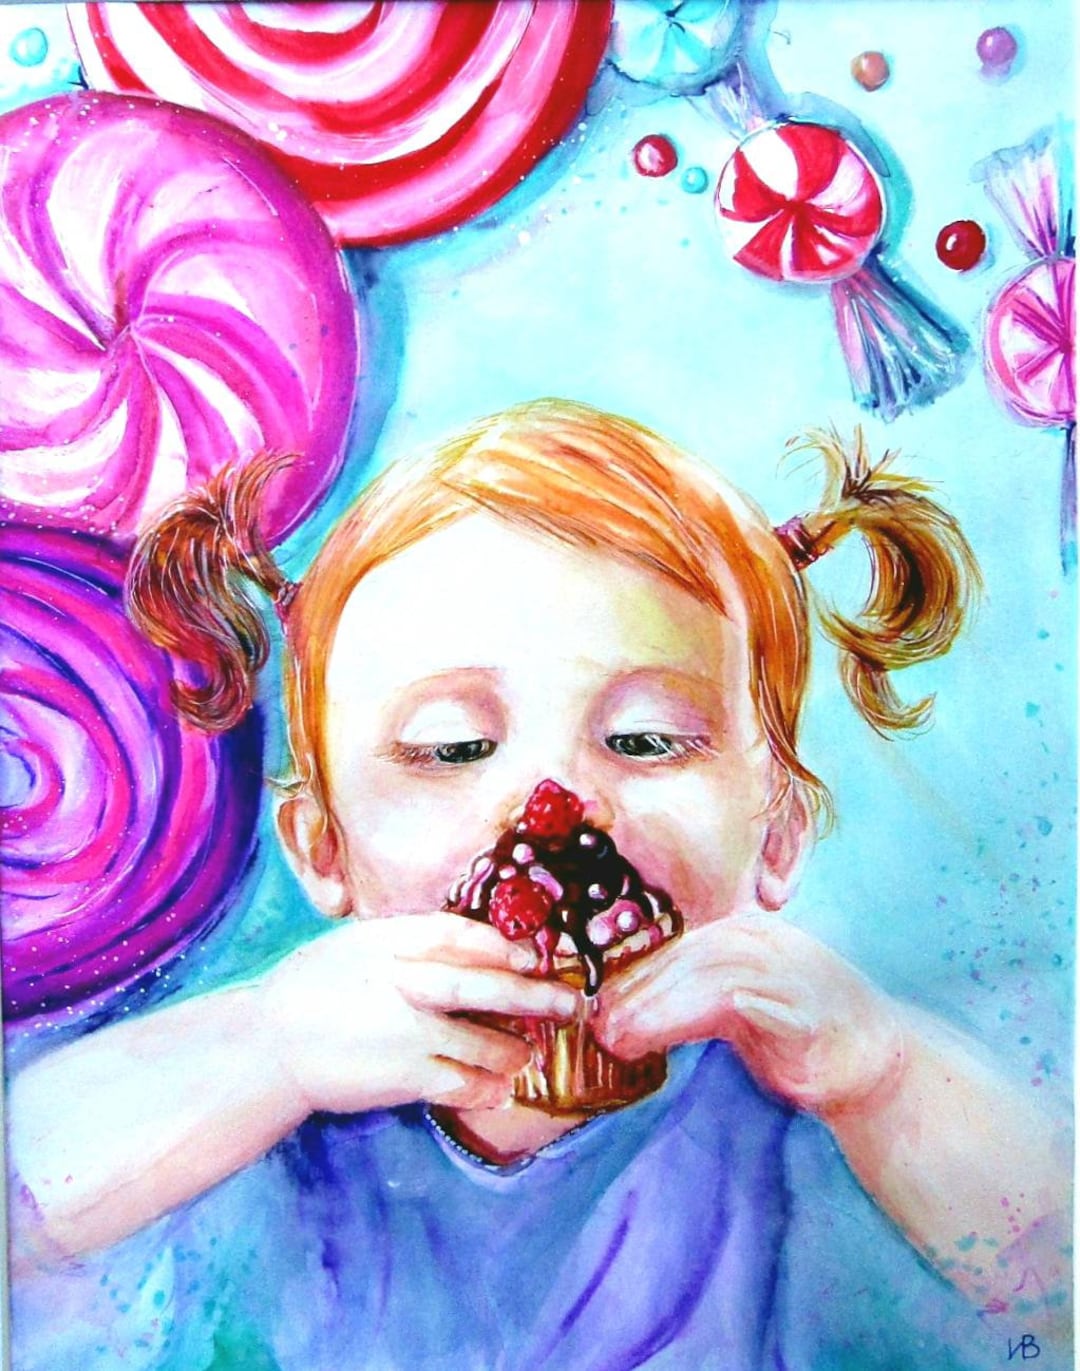 Little Girl Original Painting,kidcore Original Wall Art. Cupcake Painting,  Bright Kids Room Decor, Kitchen Wall Decor, Original Ink Drawing. 